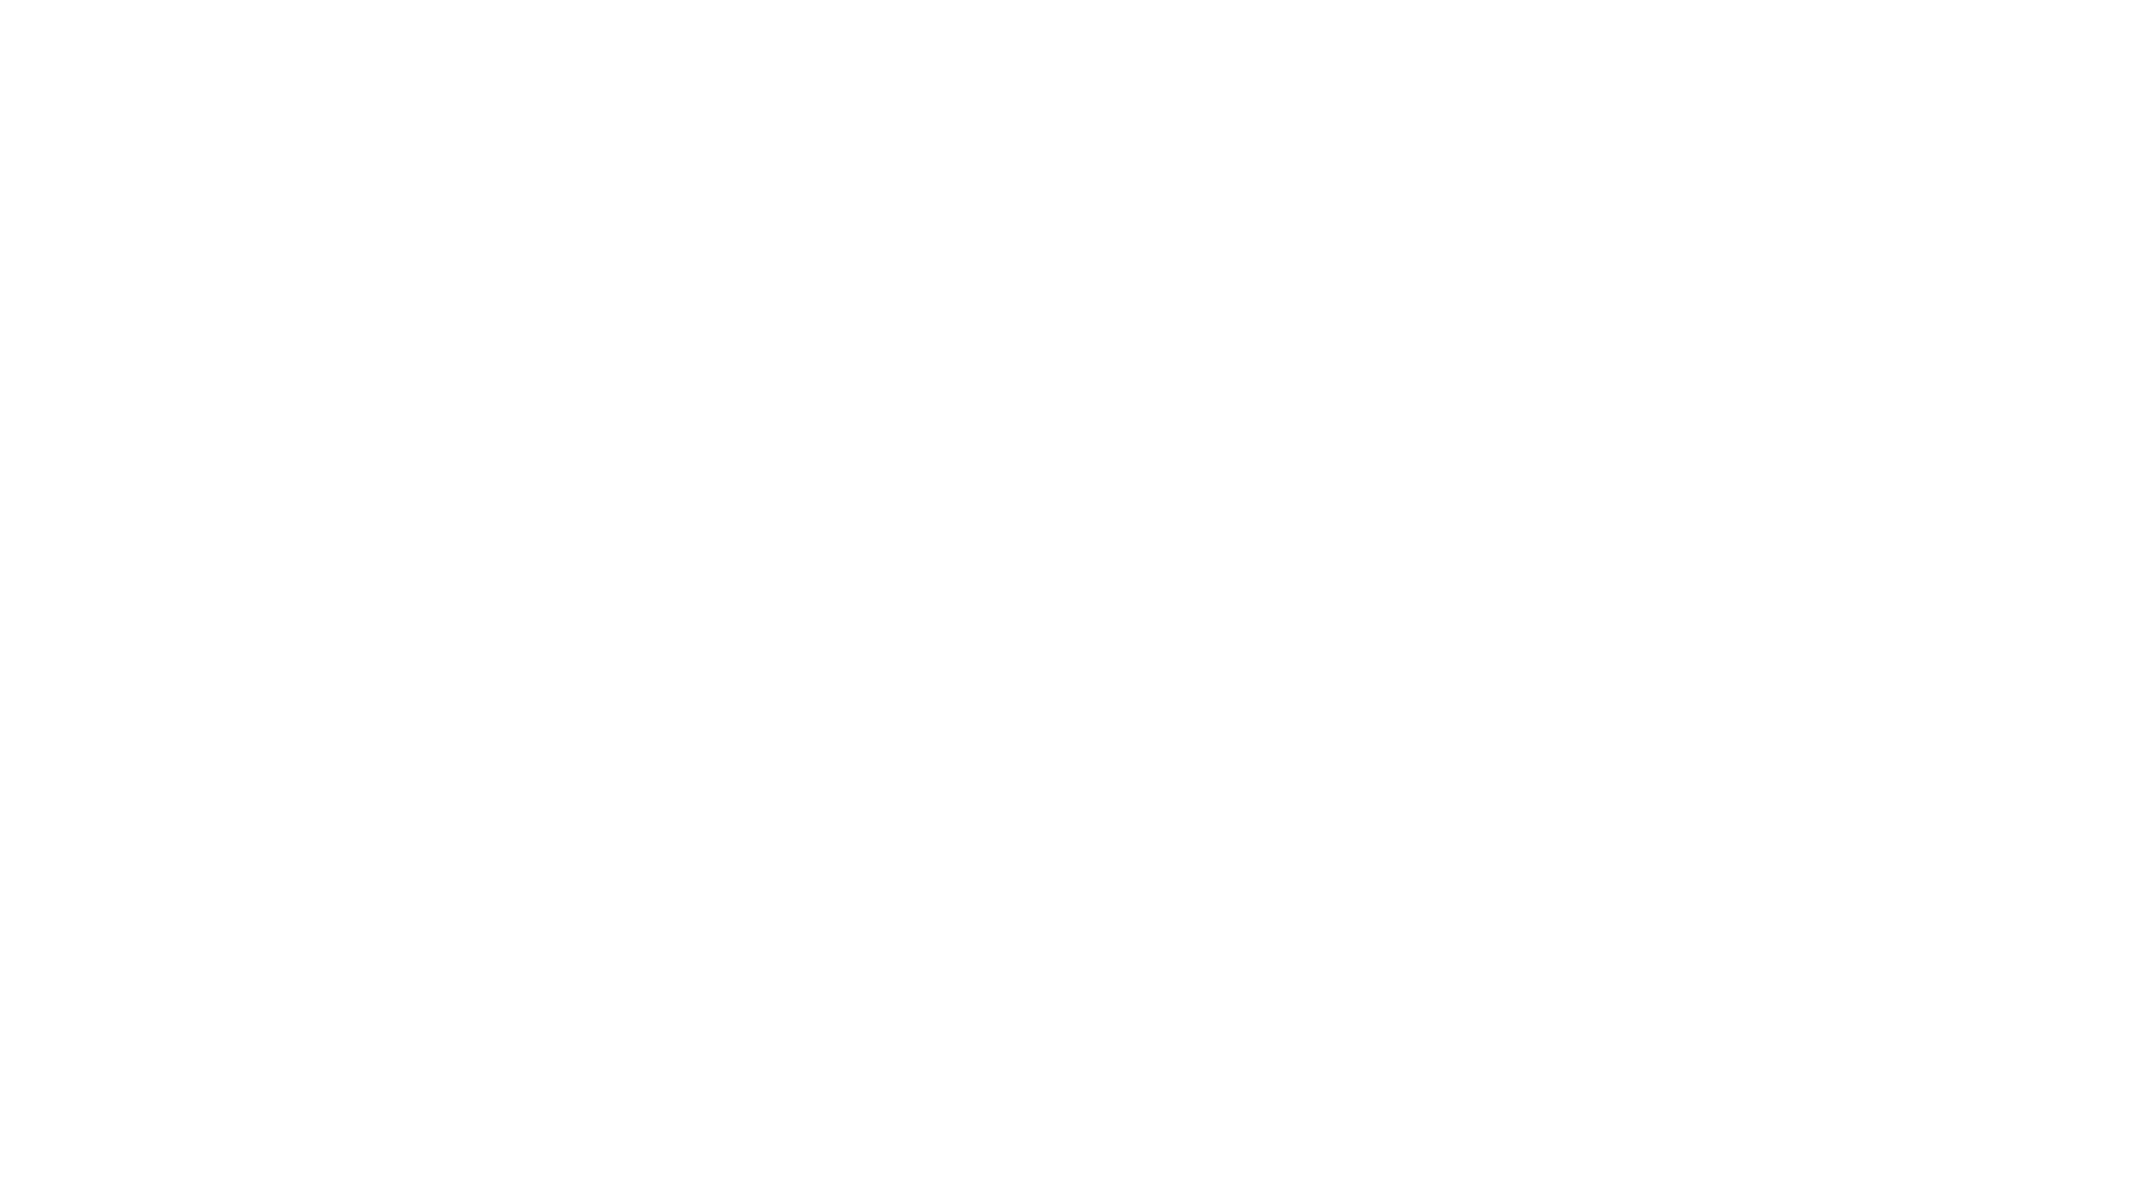 Wtdcare platform